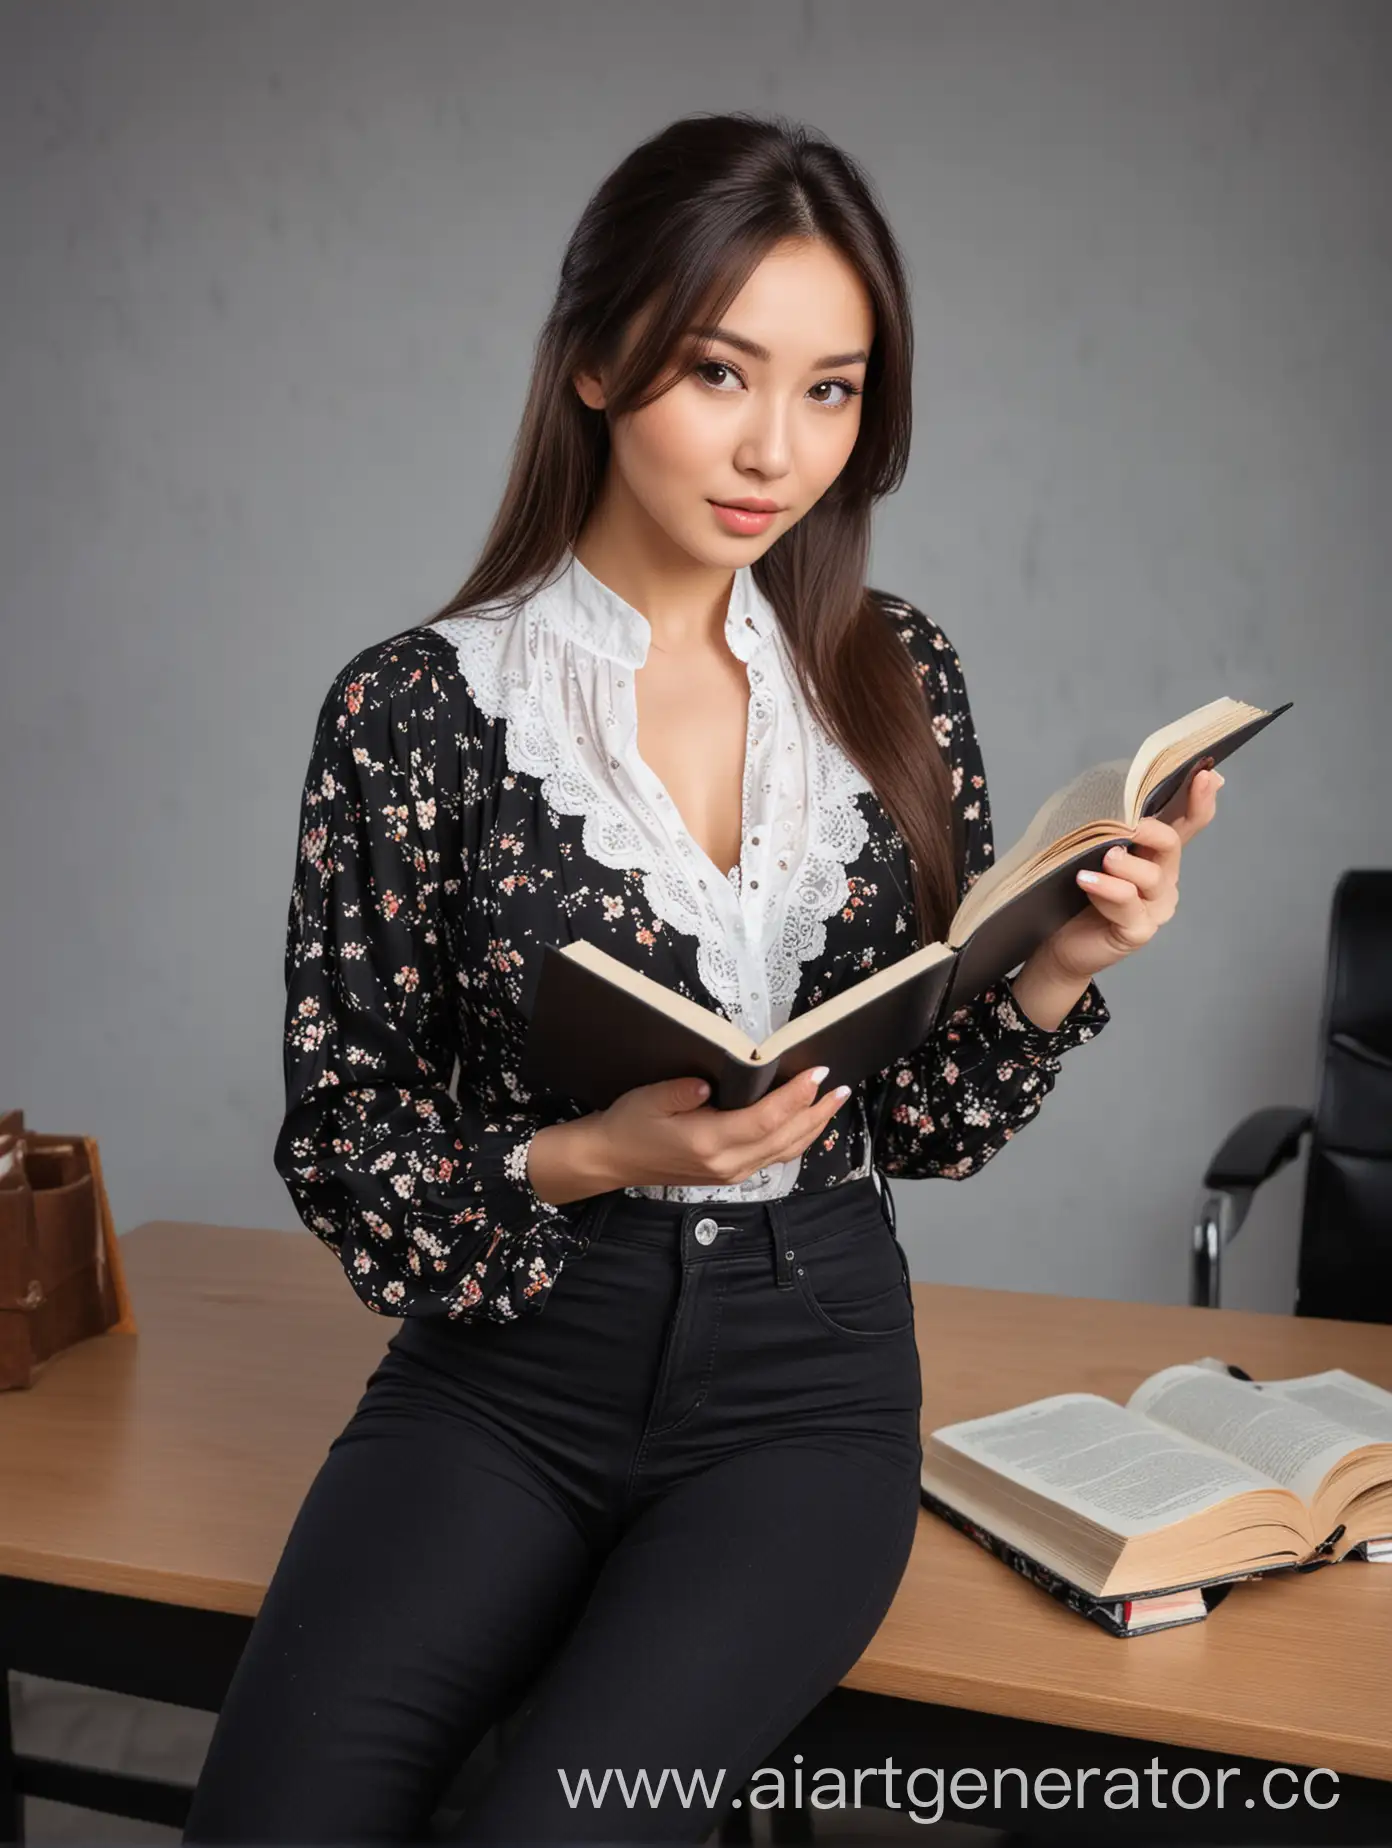 Stylish-Kazakh-Woman-Reading-at-University-Desk